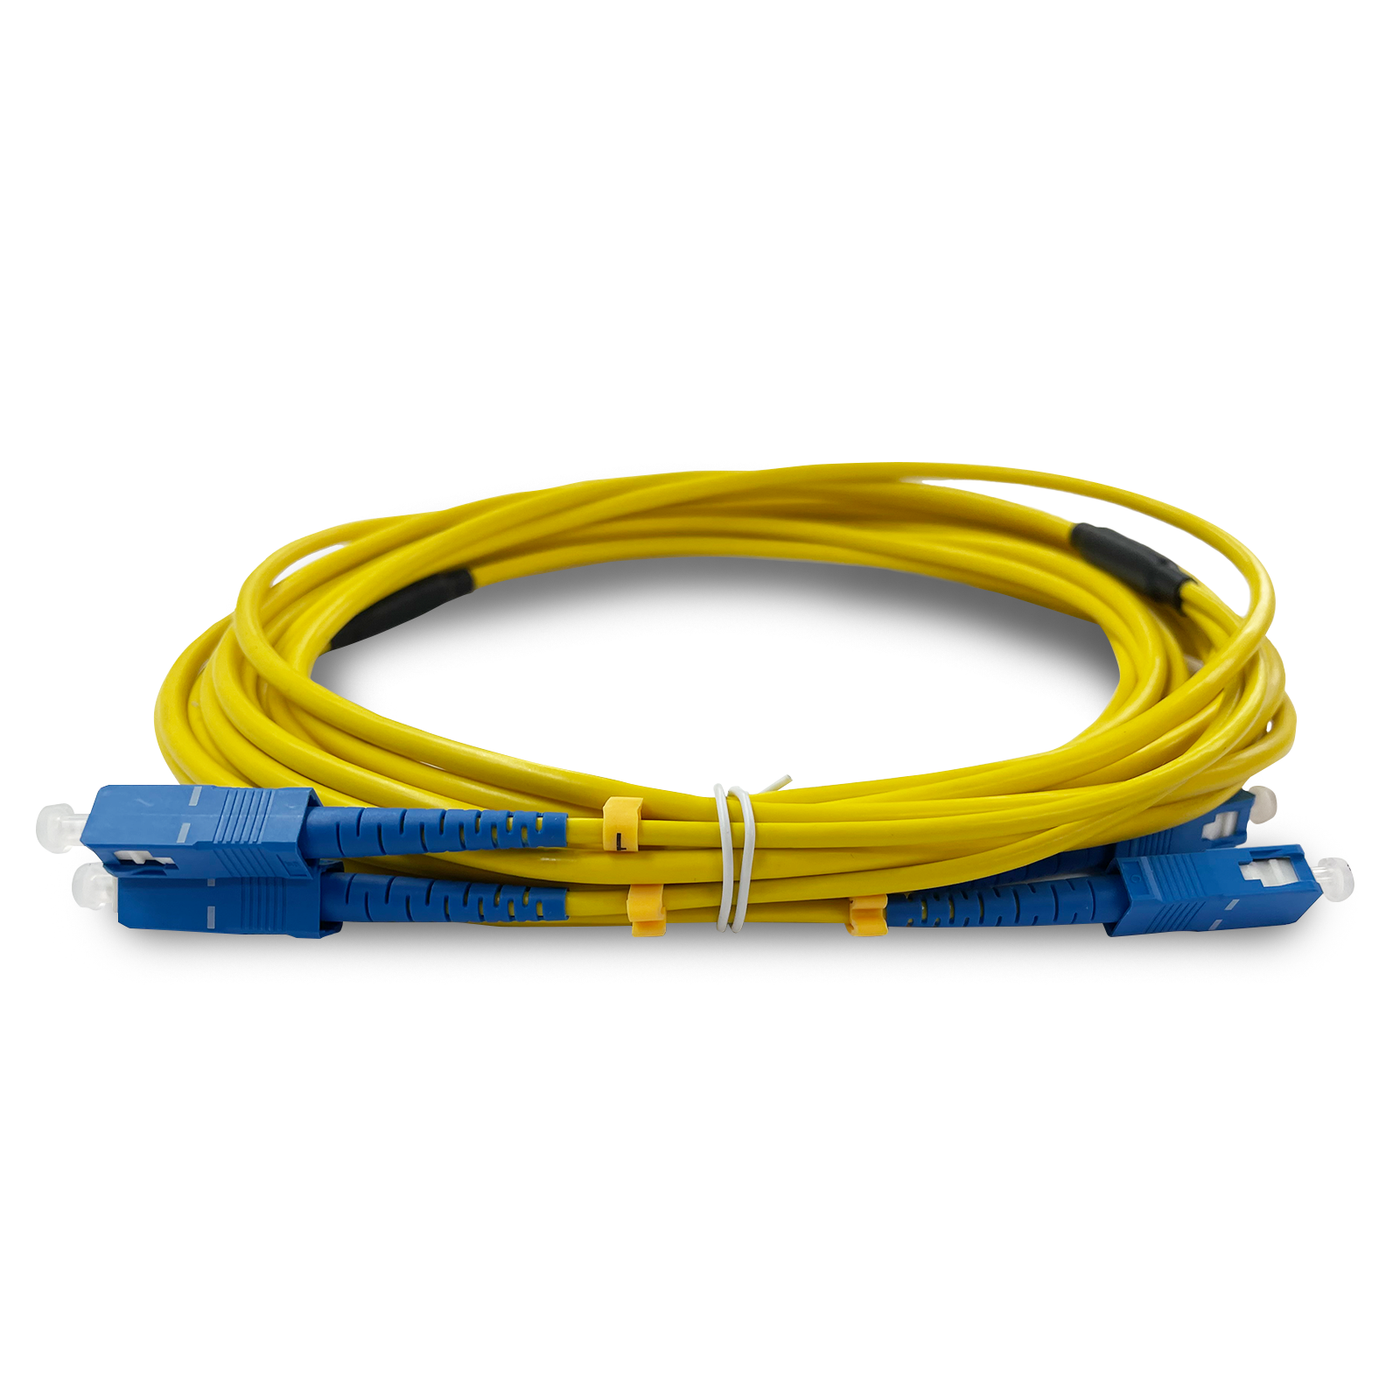 Prestige XL2/L2 Fiber Optic Cord